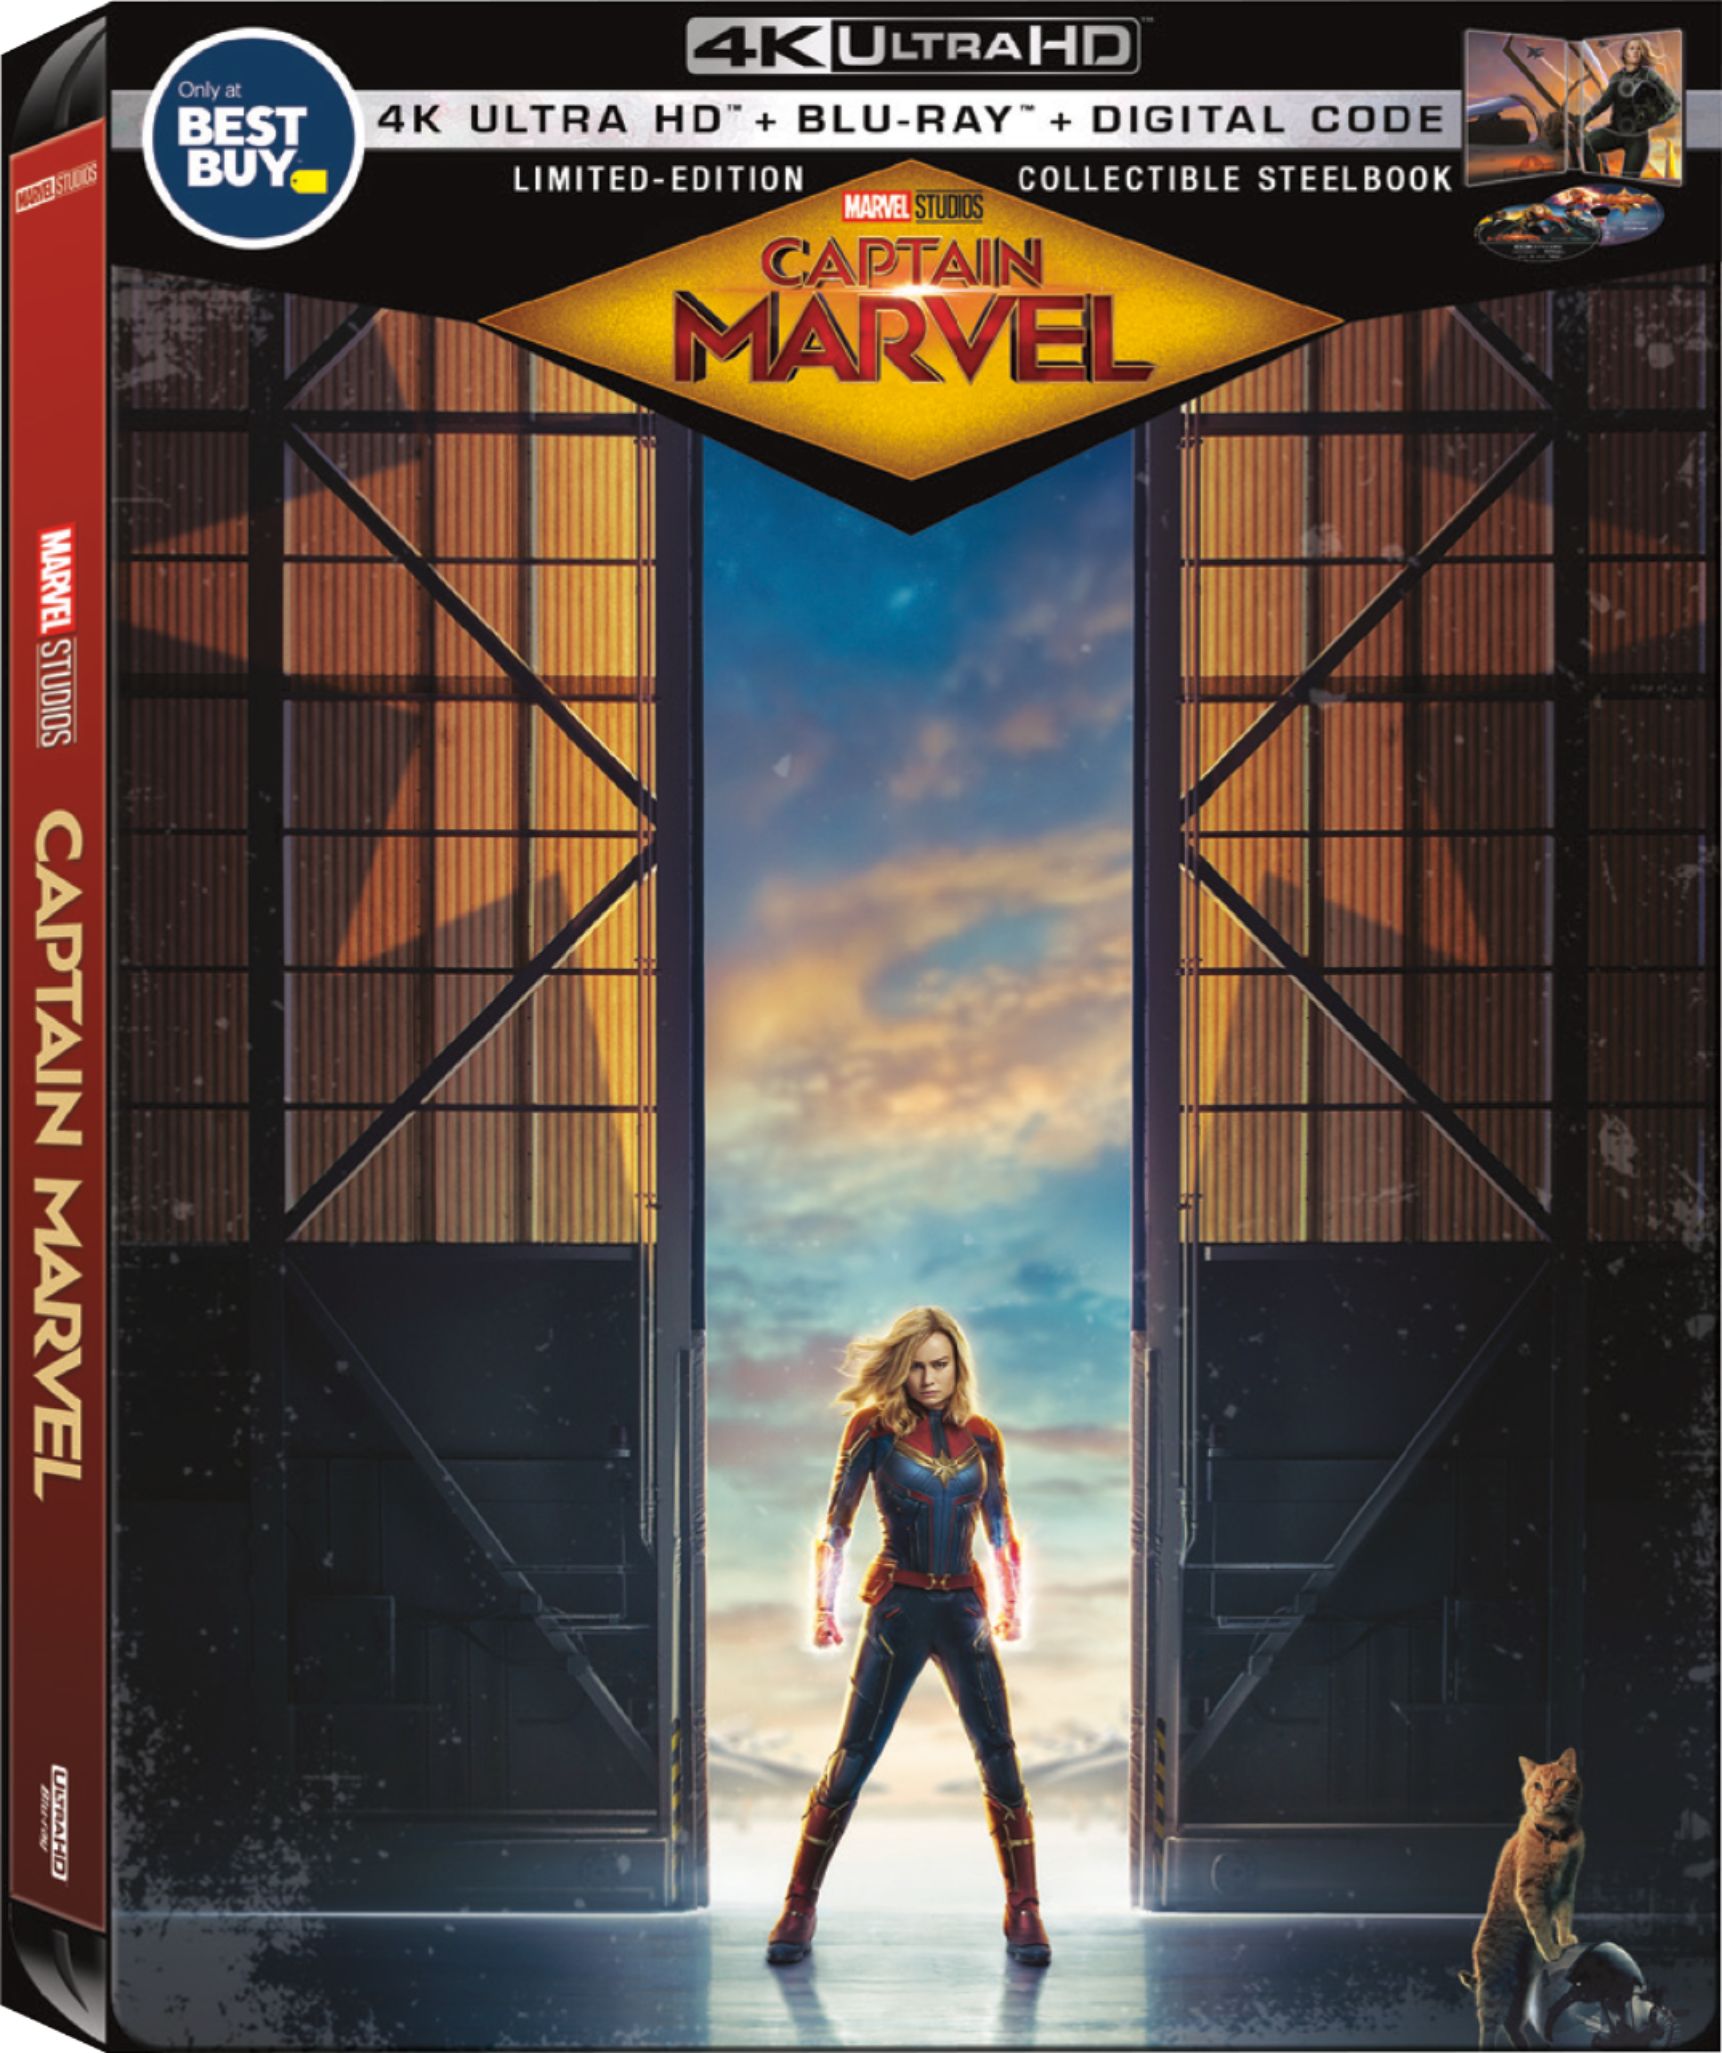 exclusive Captain Marvel collectible steelbook